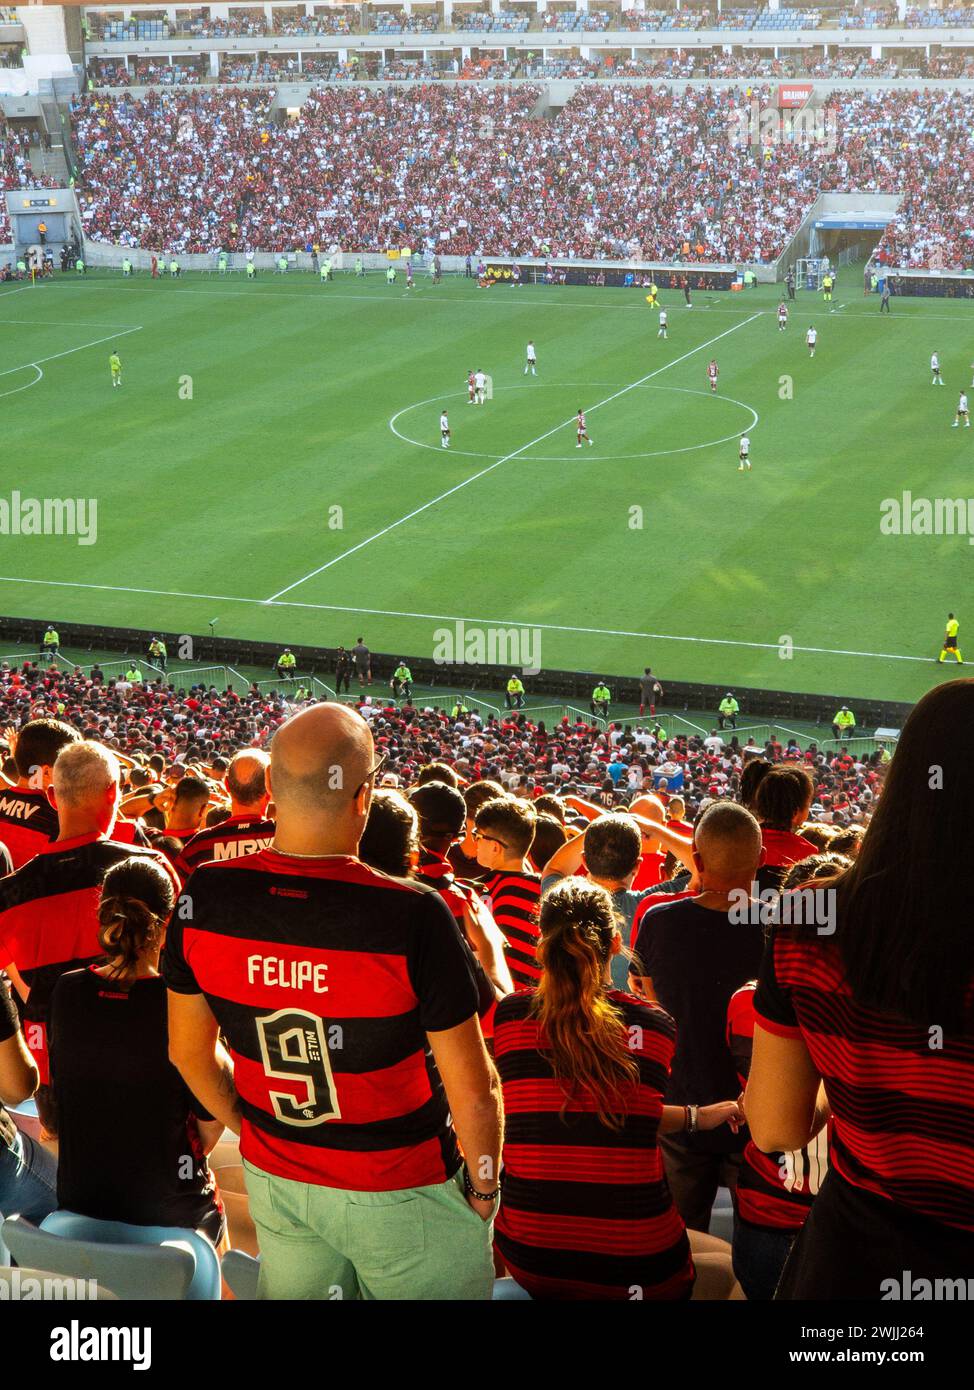 Maracana Stadium in Rio de Janeiro, Brazil - July 22, 2023: view of the Maracana Stadium during the Flamengo game in Rio de Janeiro. Stock Photo